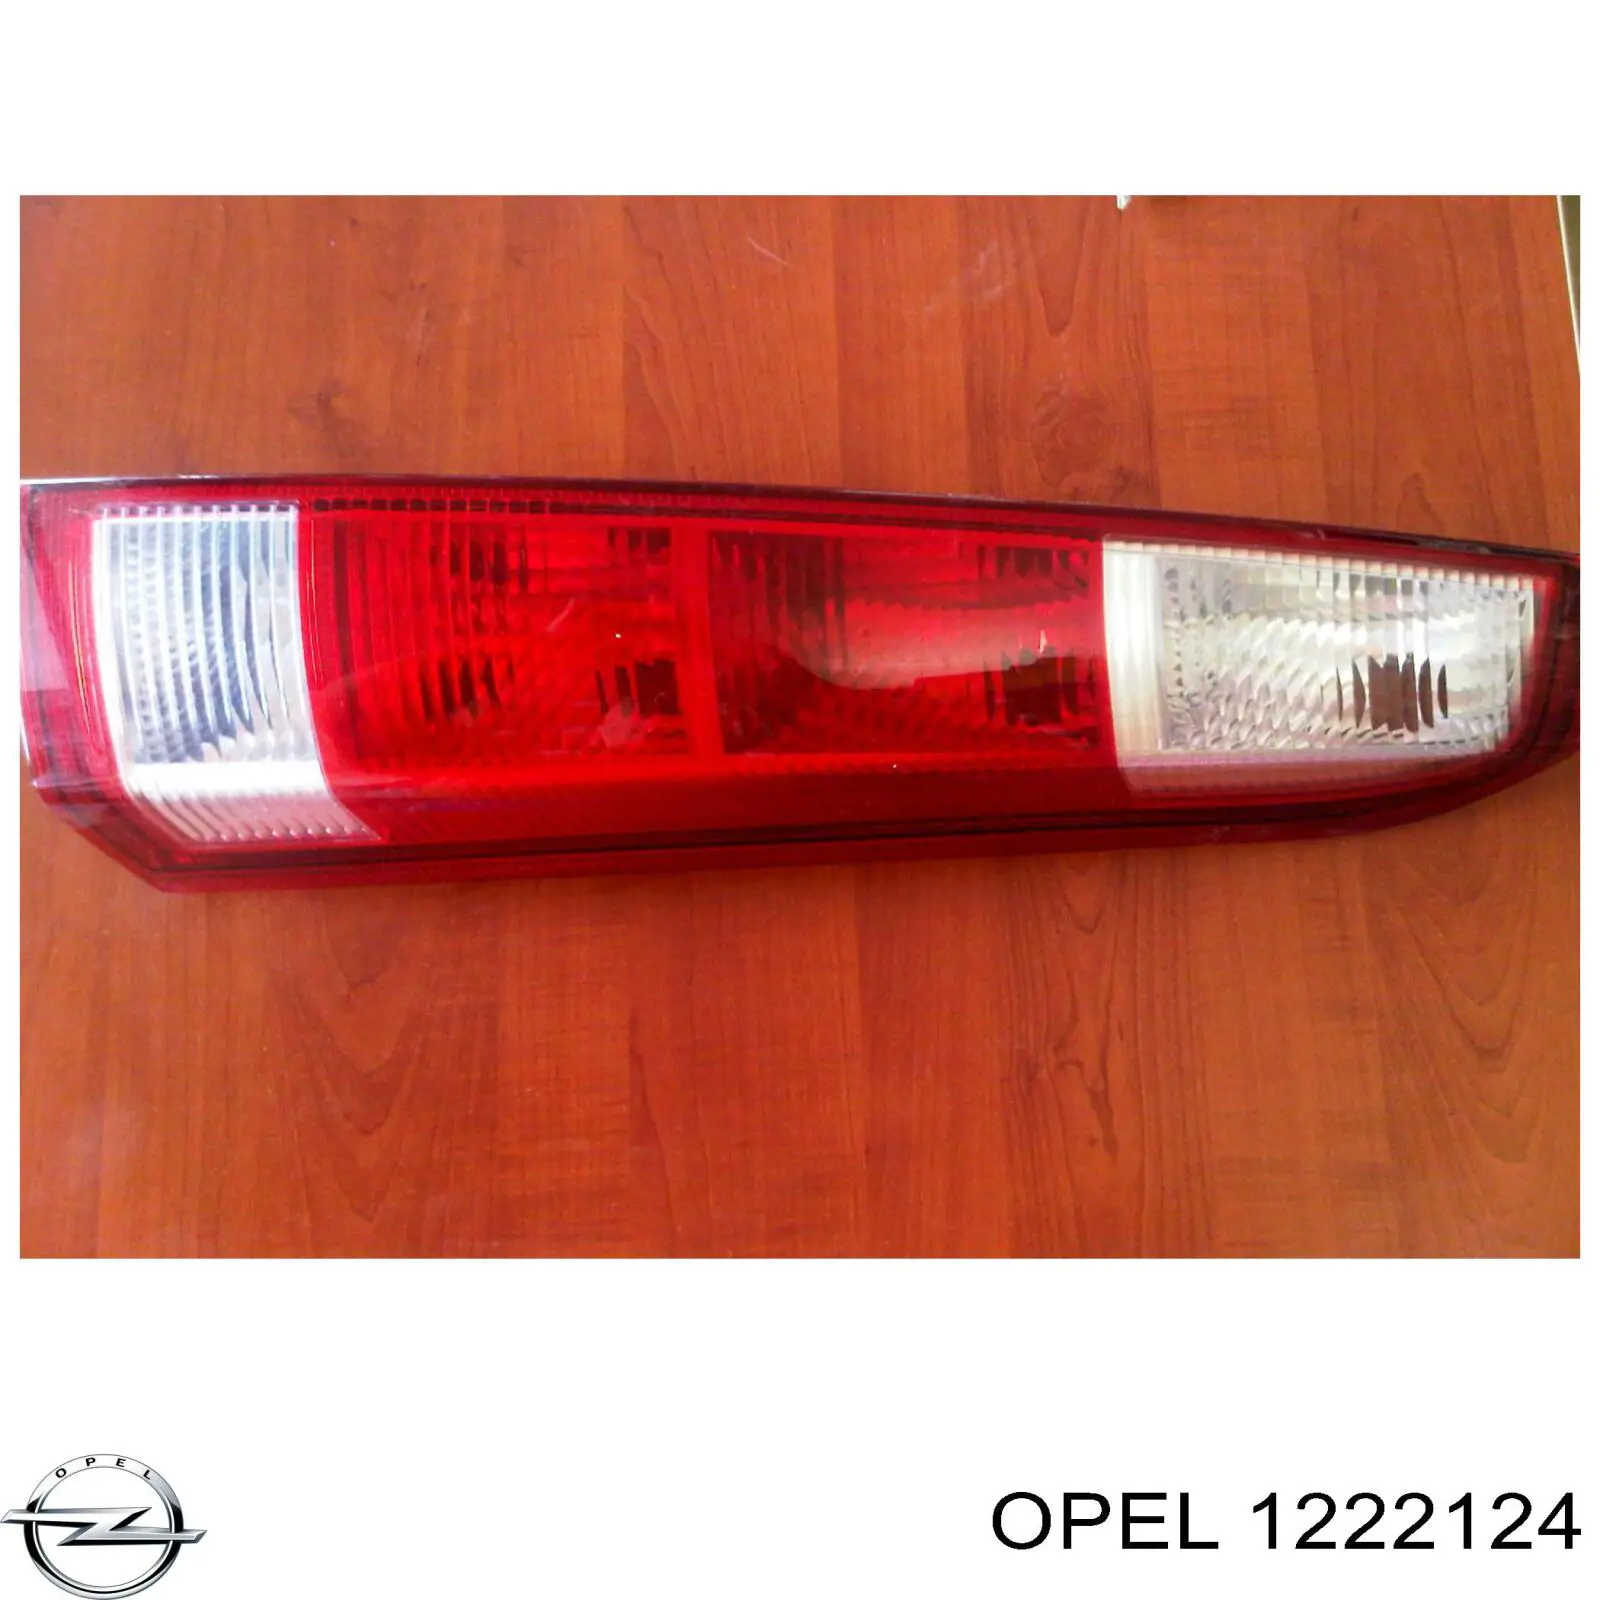 93184713 Opel piloto posterior derecho